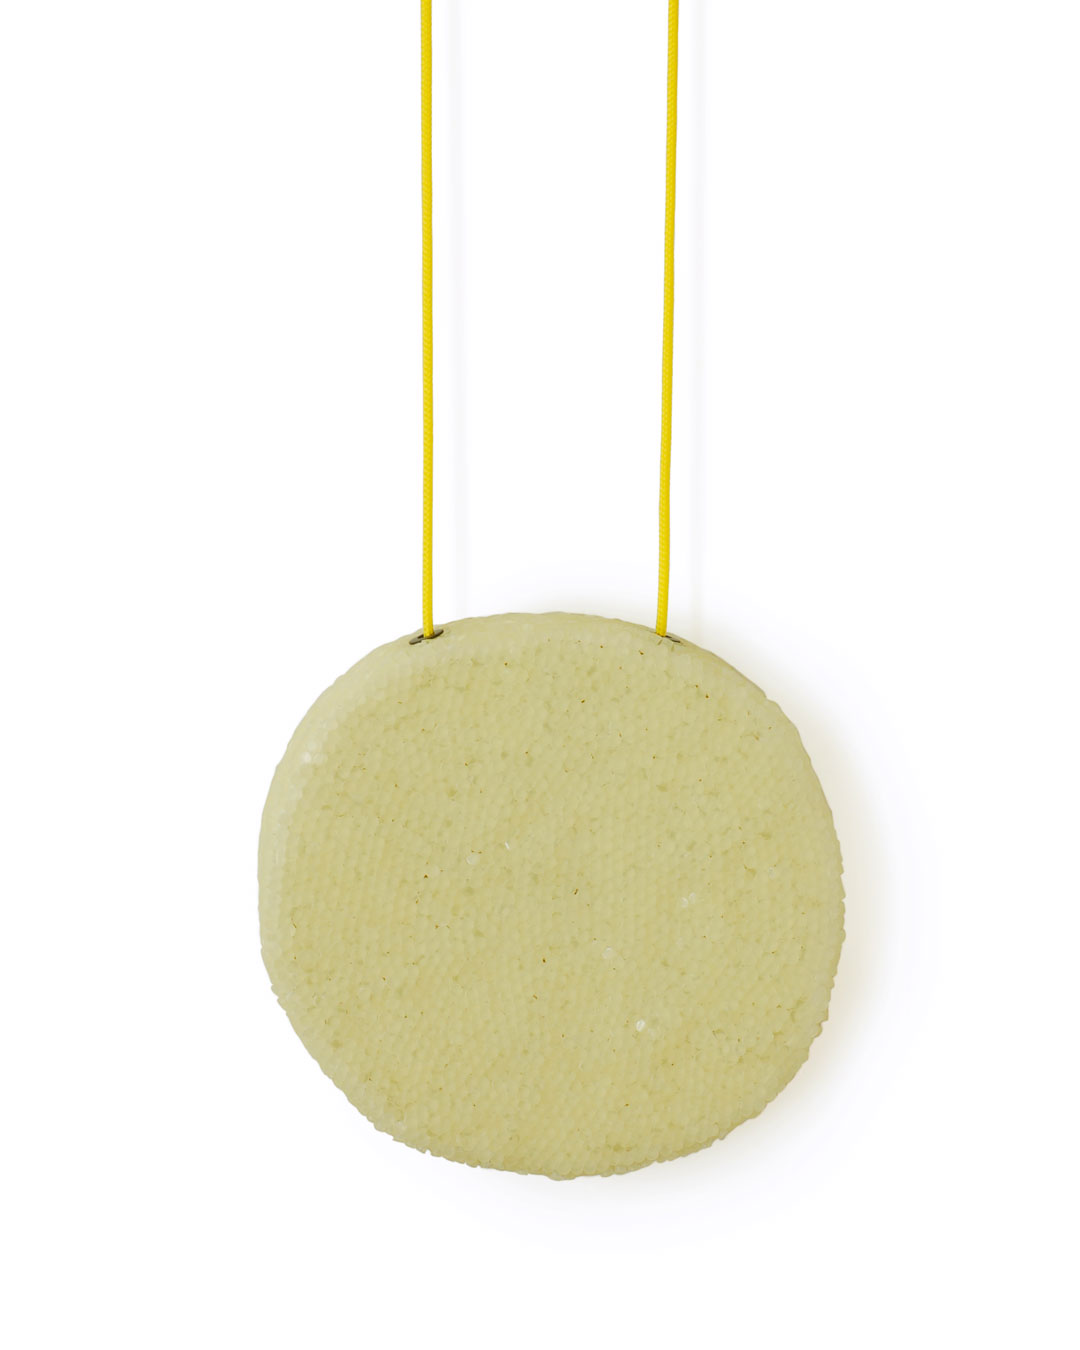 Karin Seufert, Moon Necklace, 2018, pendant; PVC (light yellow, white), oxidised silver, thread, 114 x 111 x 18 mm, €4850